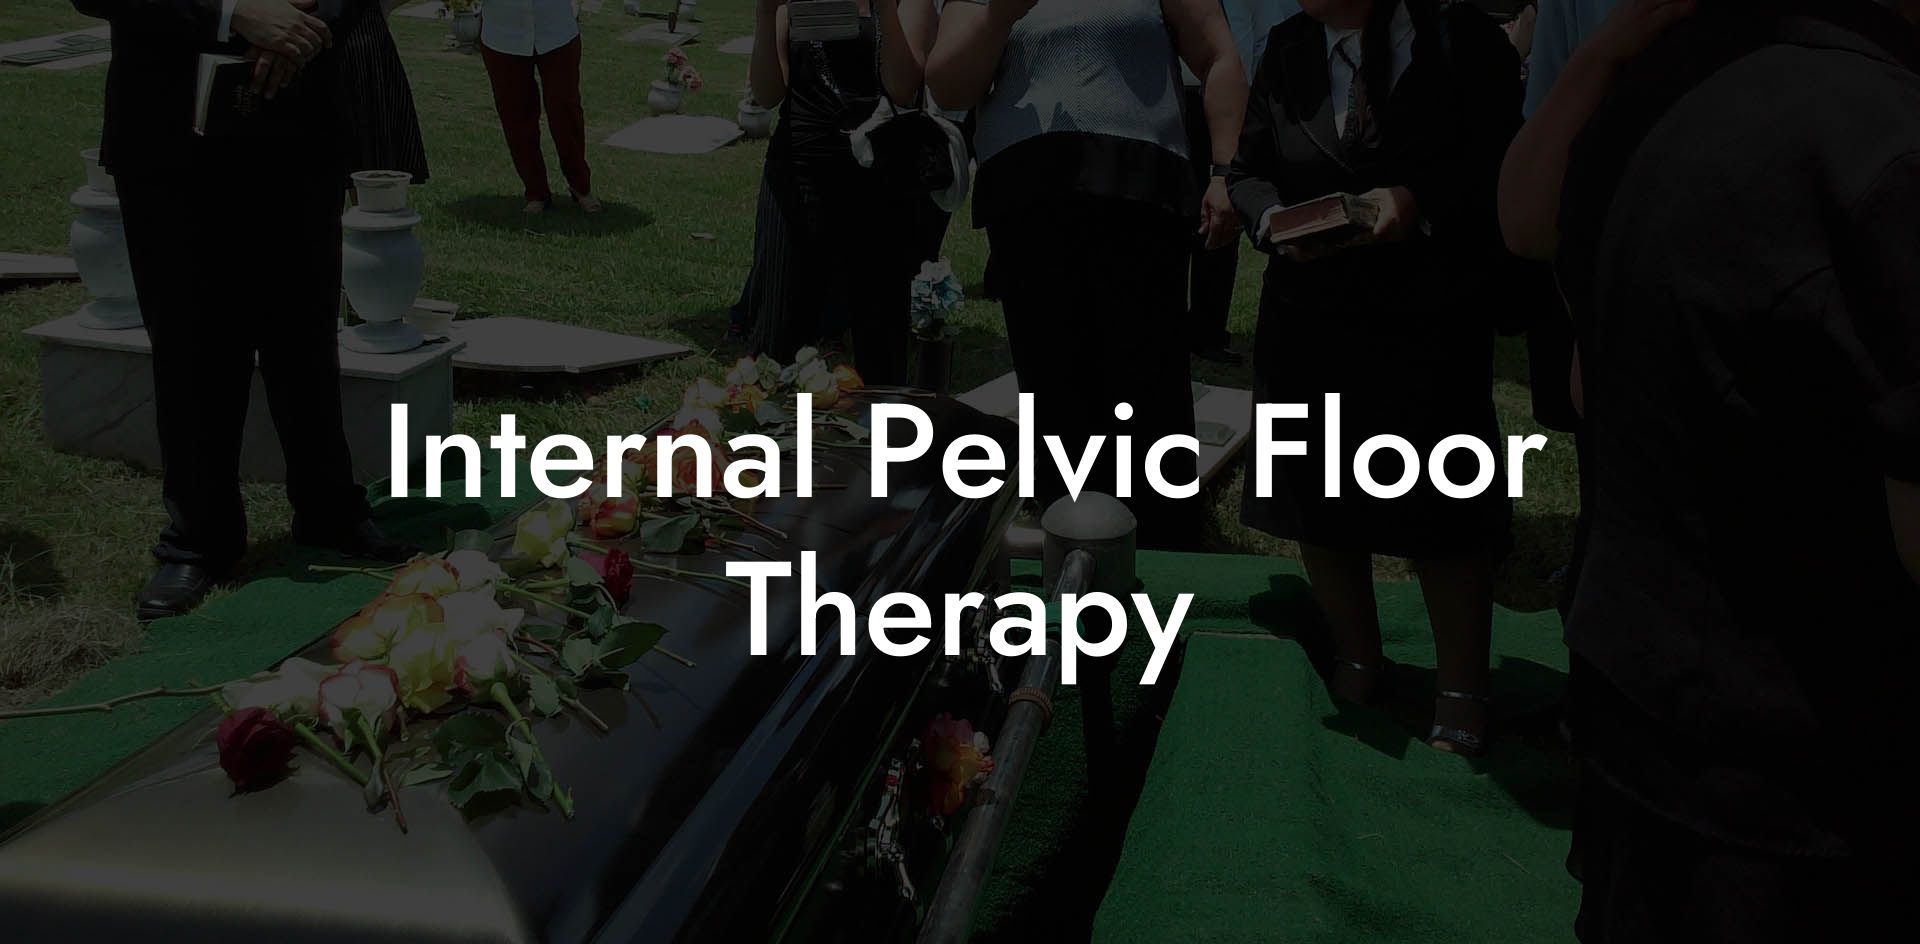 Internal Pelvic Floor Therapy